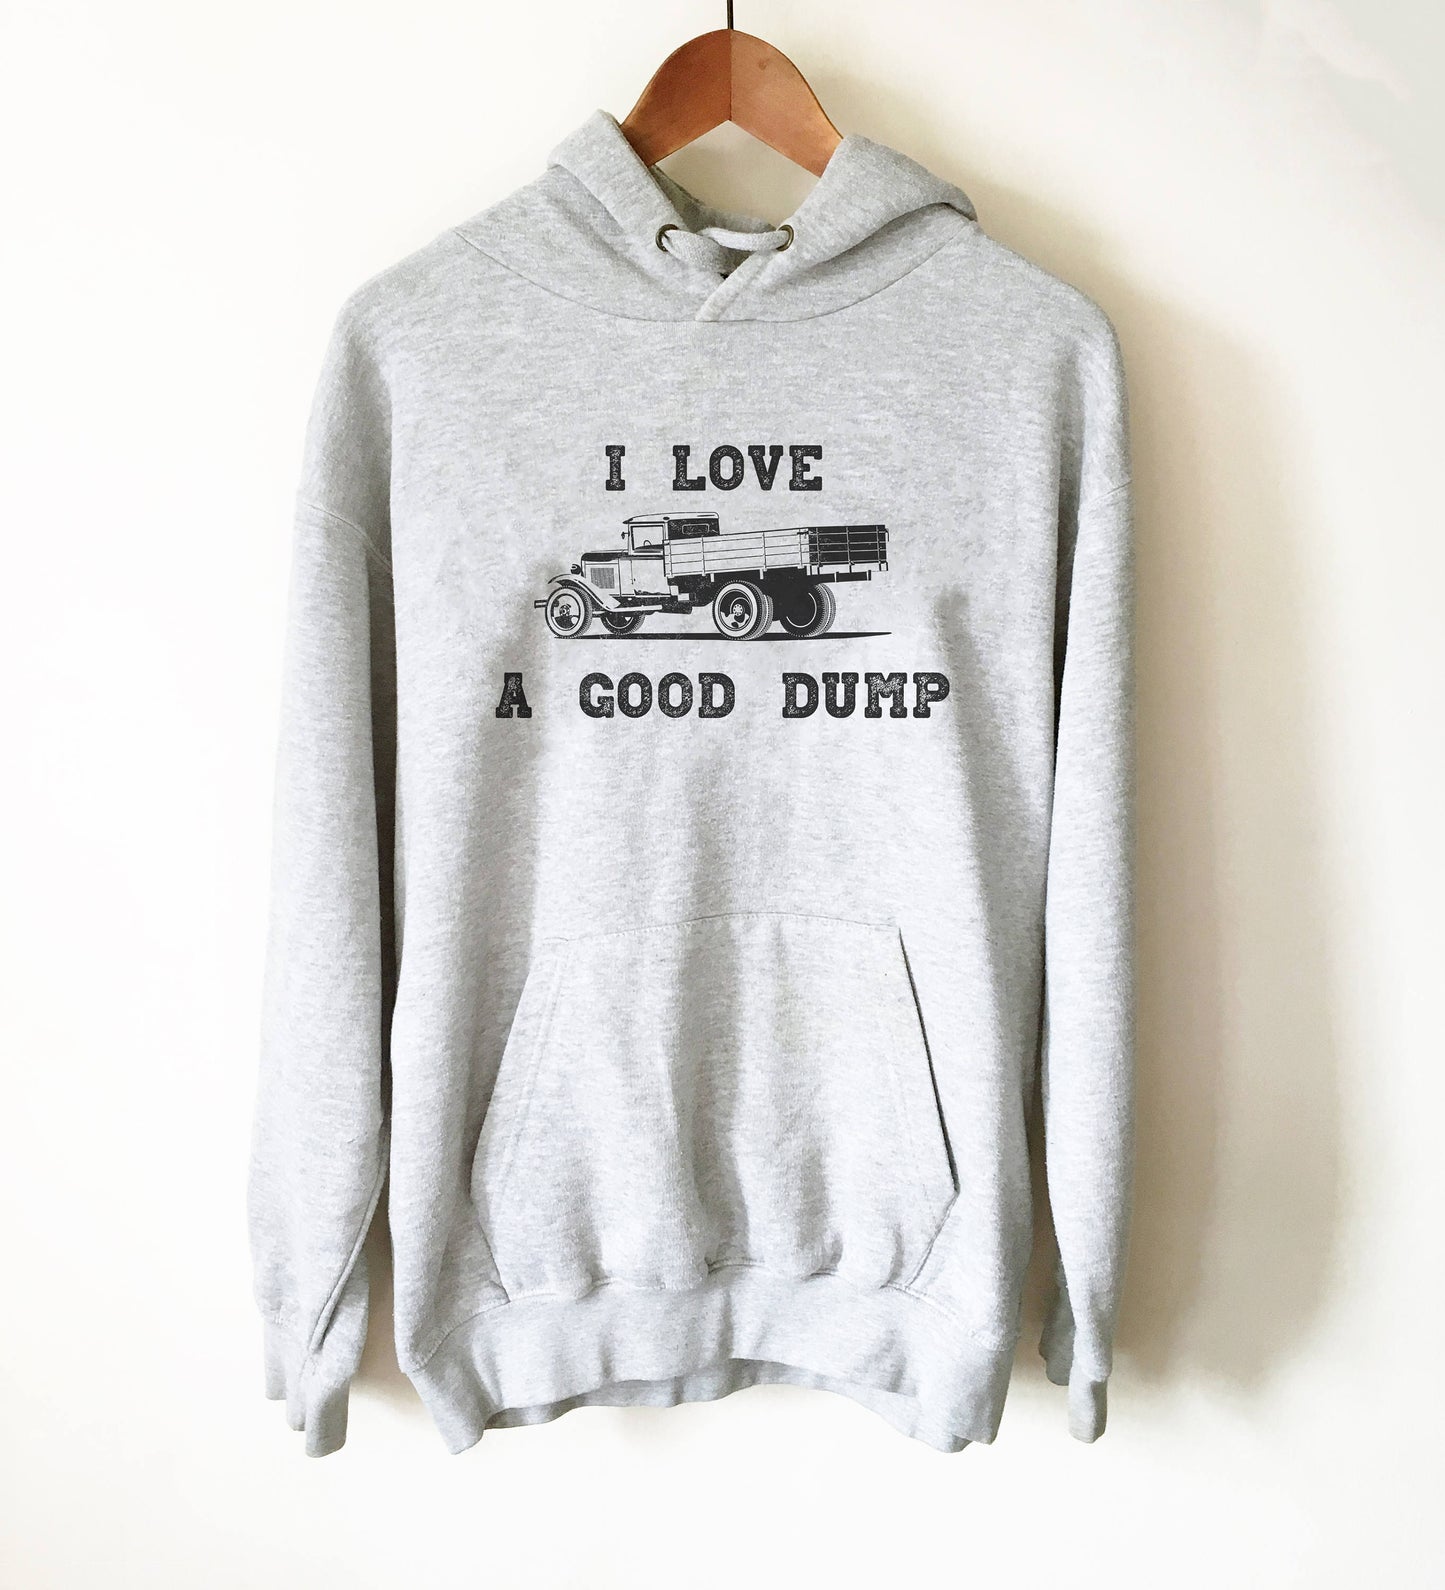 I Love A Good Dump Hoodie - Truck Driver Shirt, Truck Driver Gifts, Dump Truck Shirt, Construction Shirt, Garbage Truck Shirt